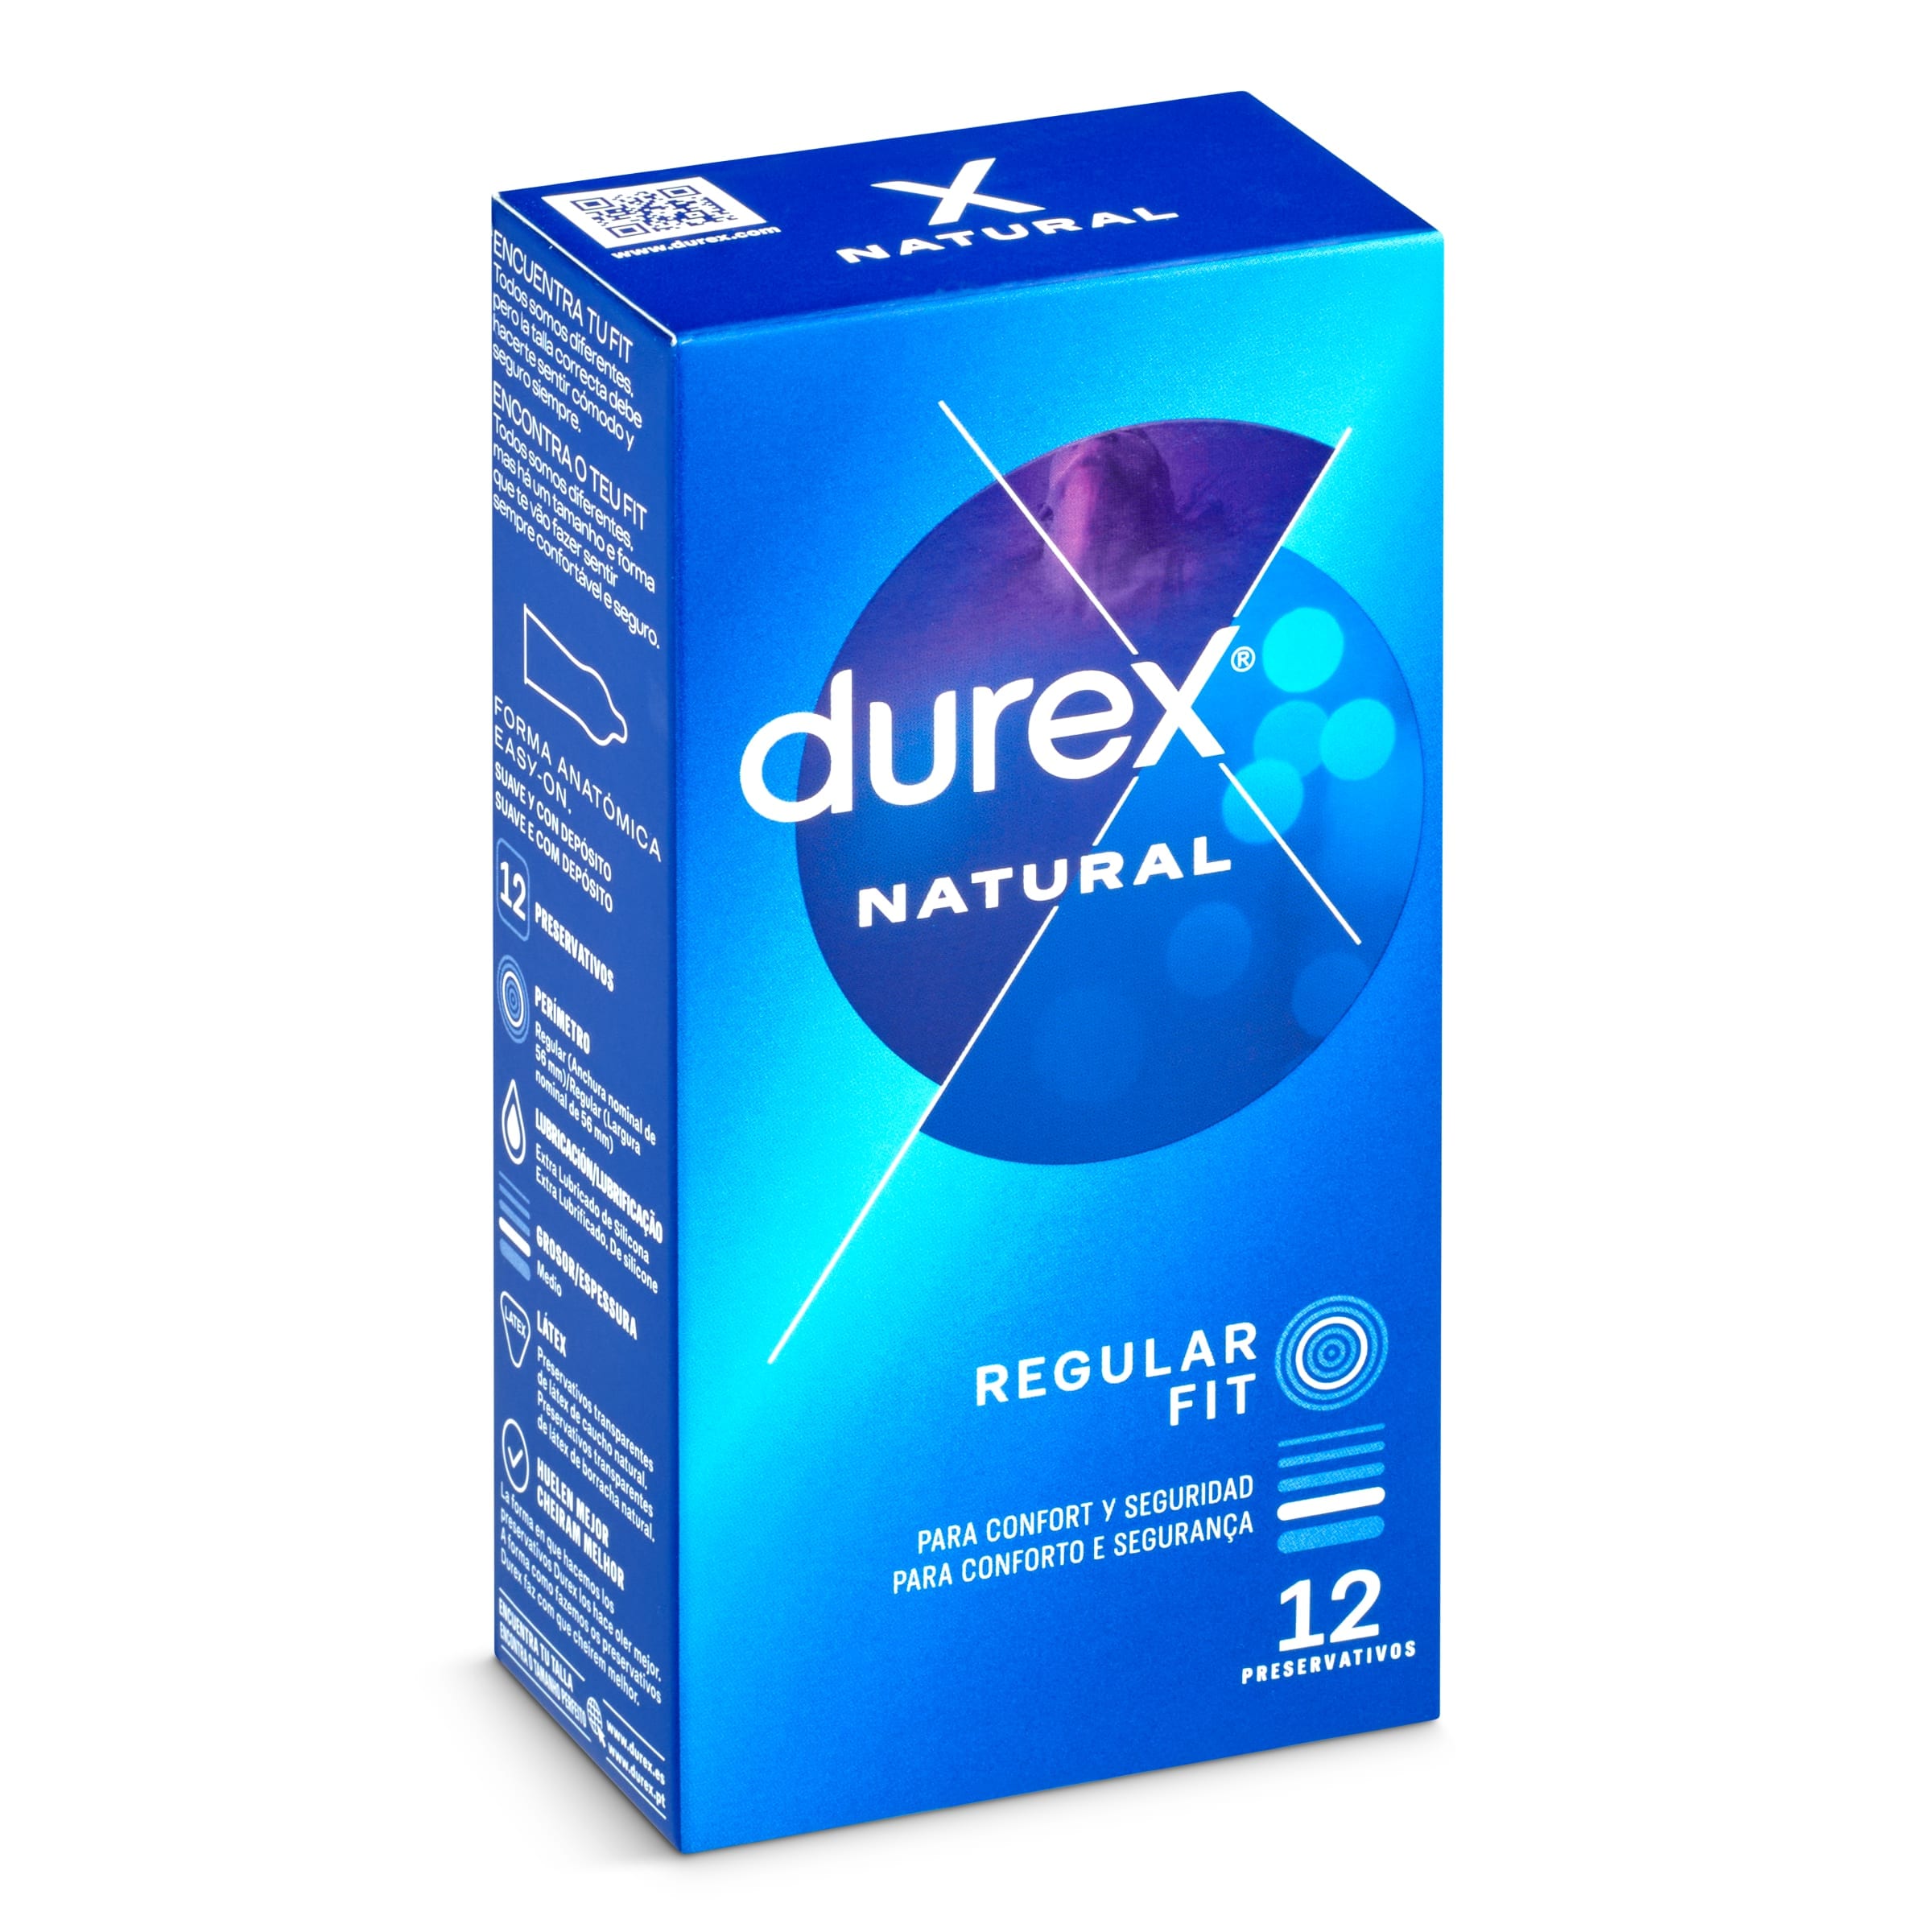 Preservativos natural comfort Durex caja 12 unidades - Supermercados DIA